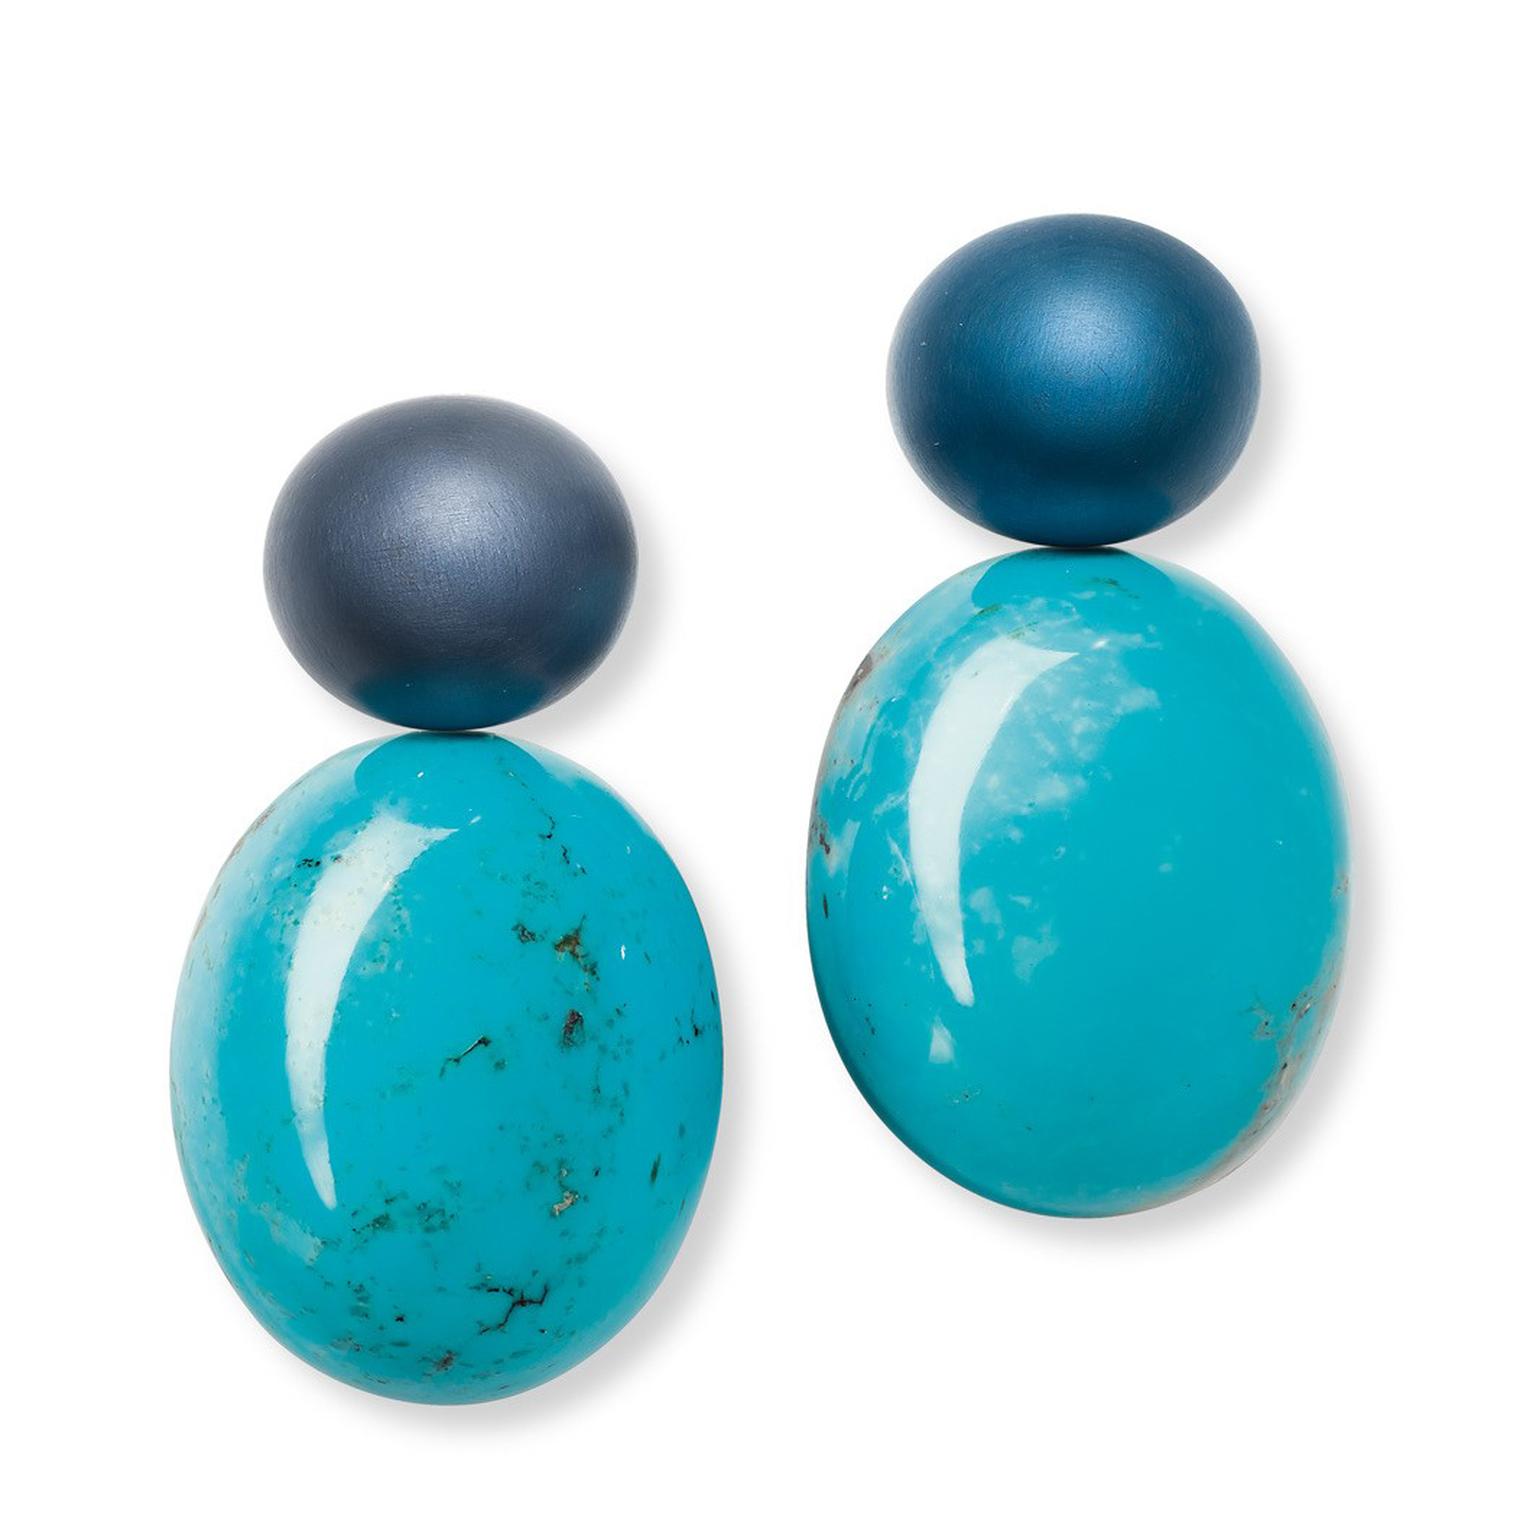 Hemmerle turquoise and blue aluminium earrings